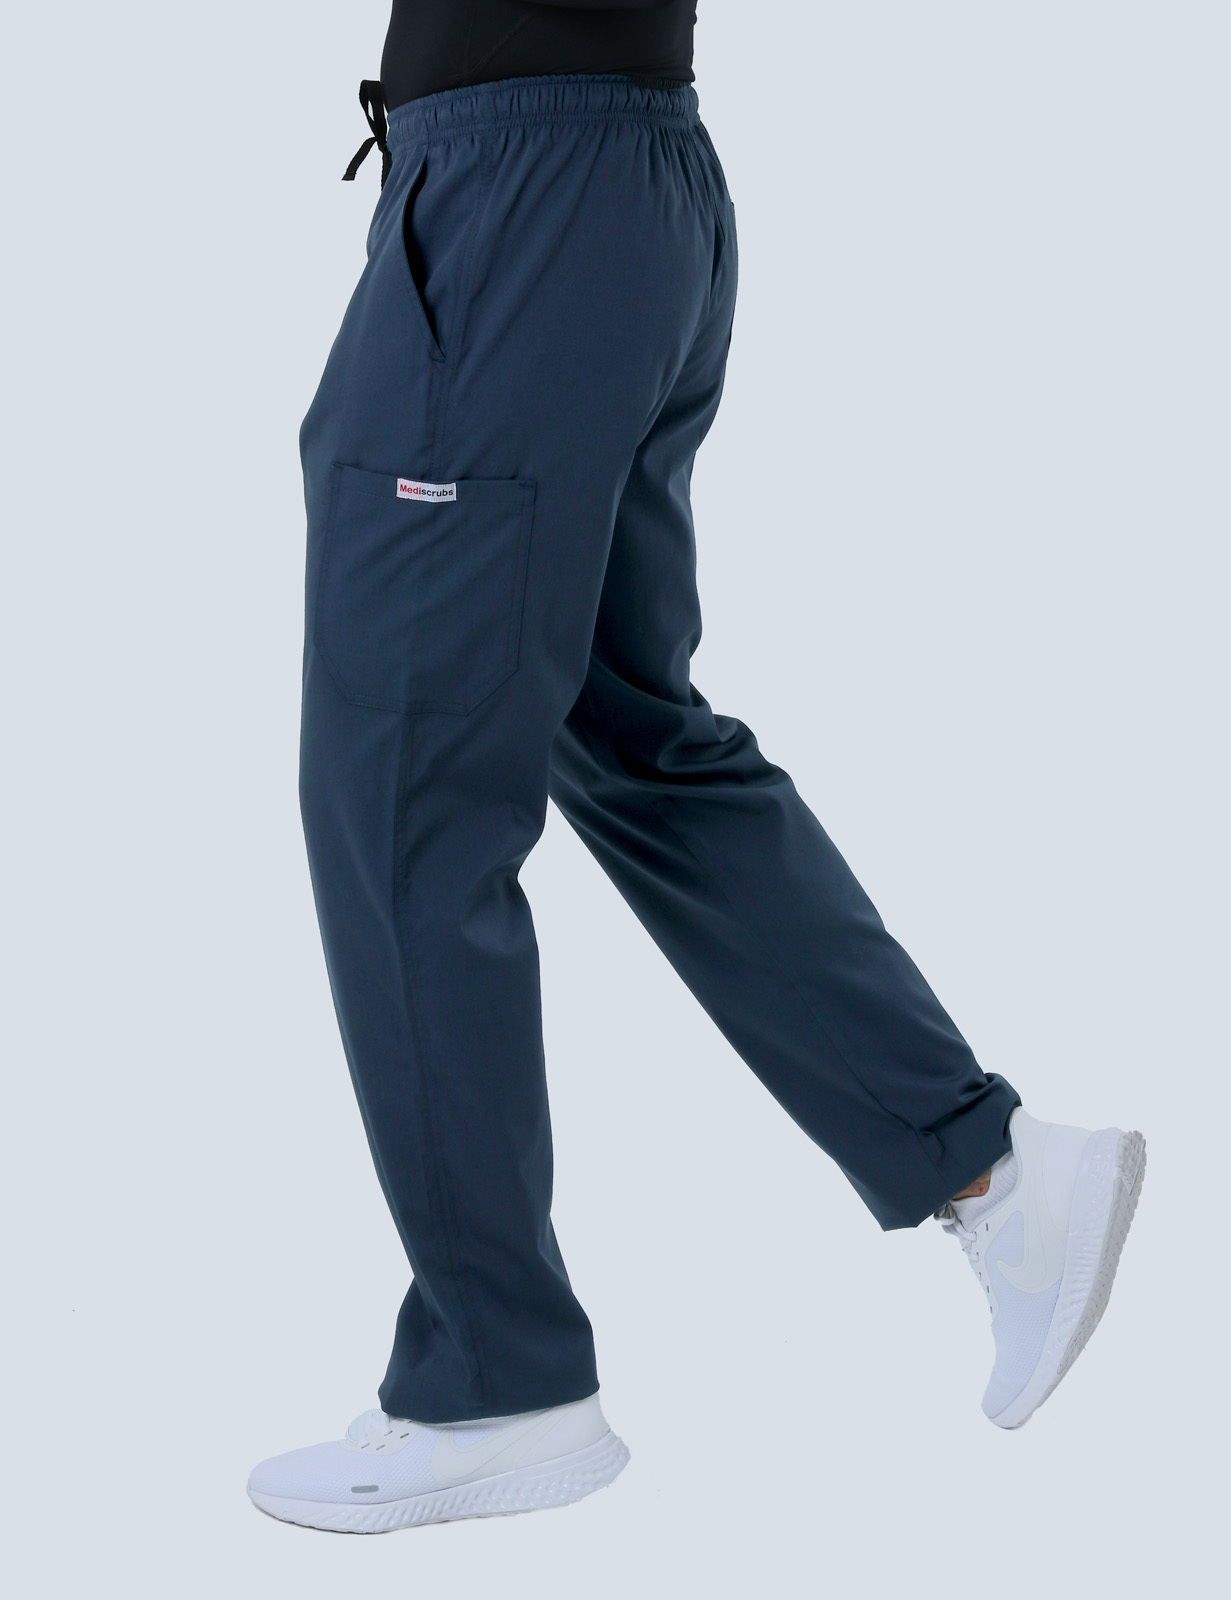 Men's Cargo Performance Pants - Navy - XX Small